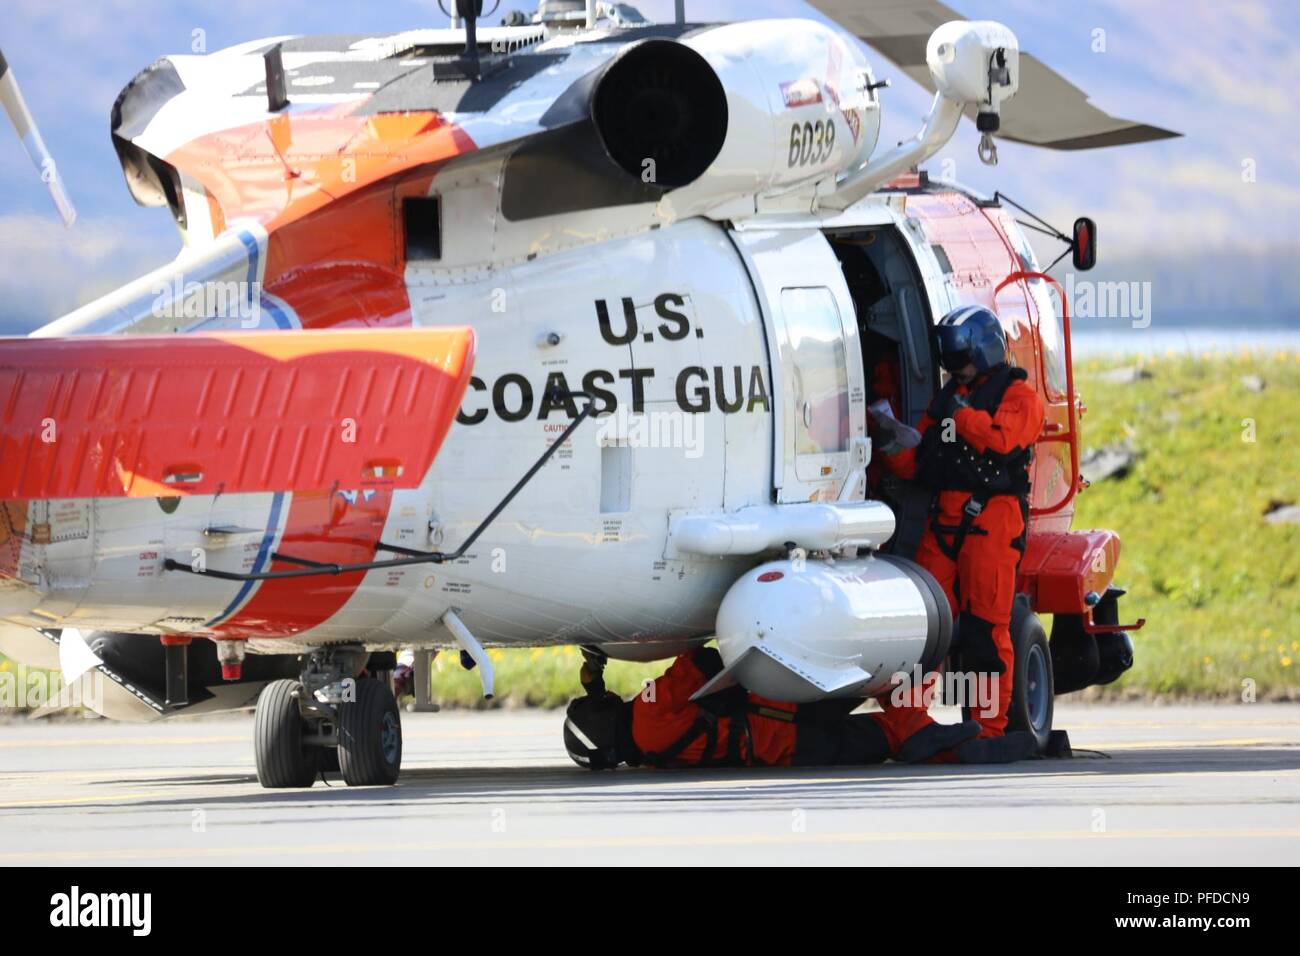 A Coast Guard aircrew conducts safety checks on the tarmac before a flight in Kodiak, Alaska, June 1, 2018. Safety checks ensure aircraft are safe for flight. U.S. Coast Guard Stock Photo